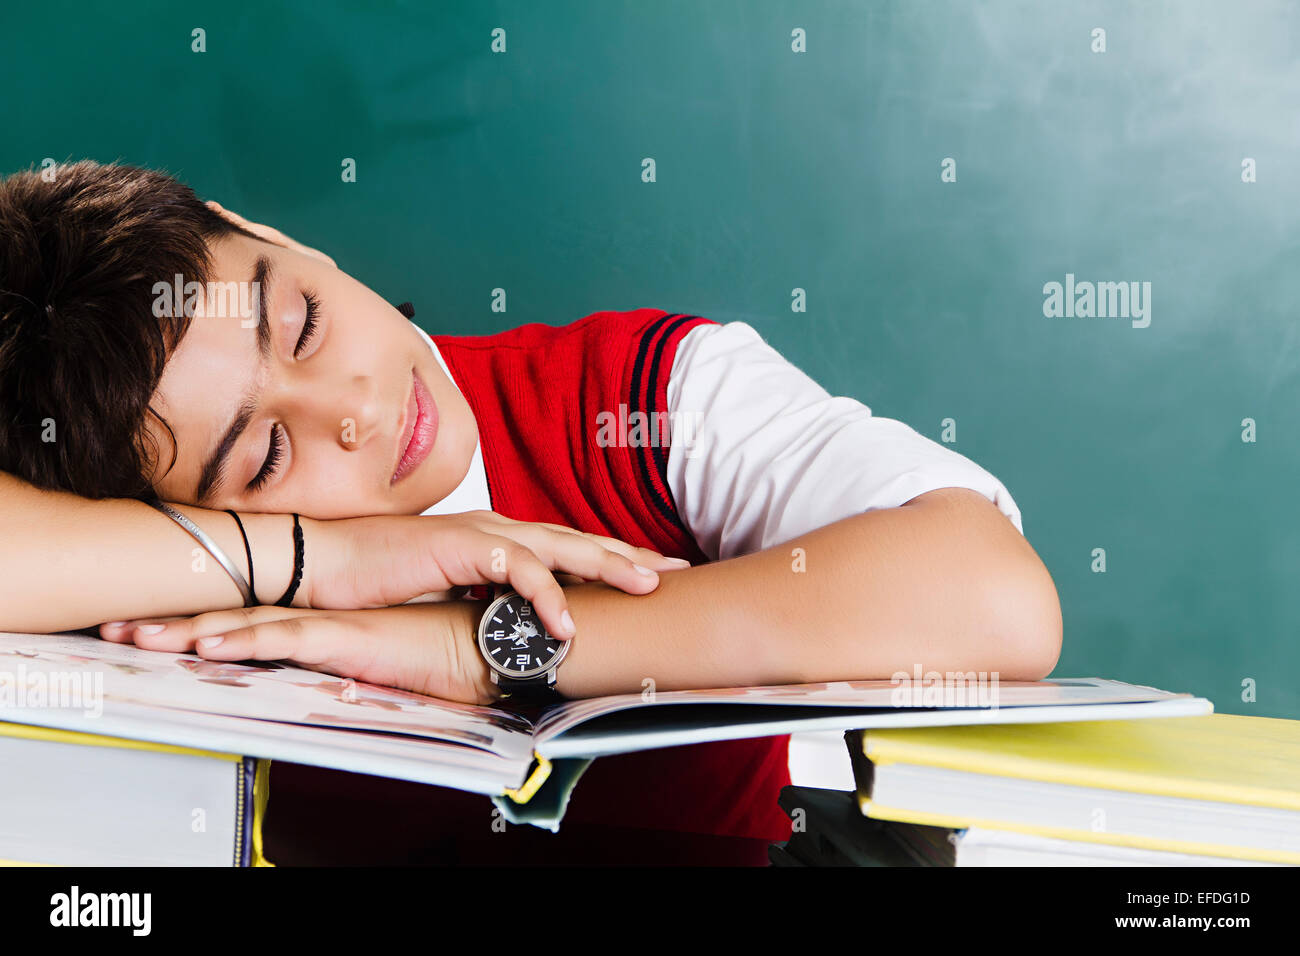 1 indian school boy student sleeping book Study Stock Photo